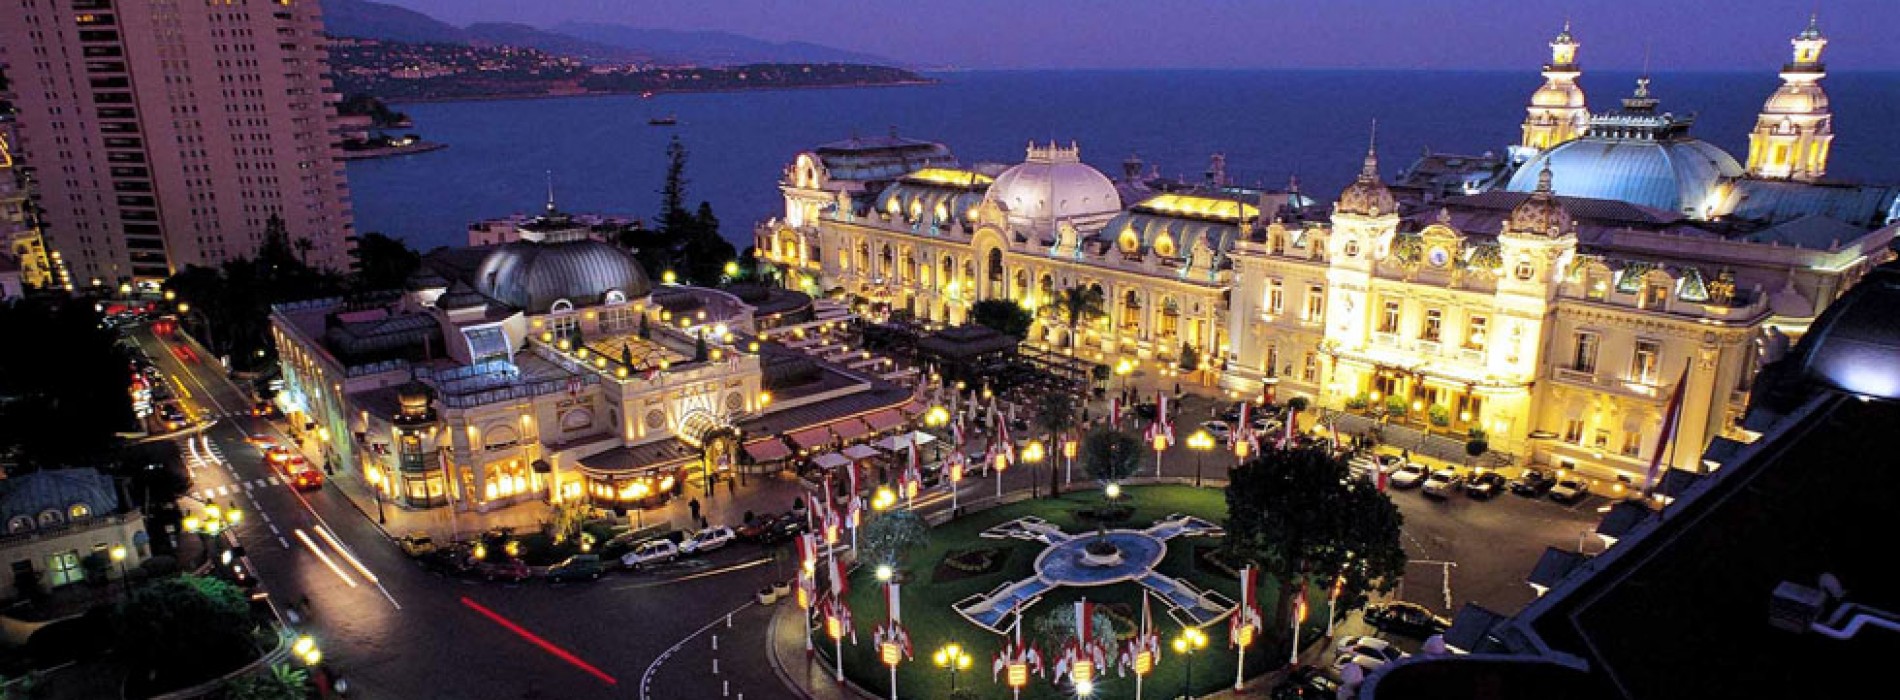 Explore Monaco’s majestic beauty and Opulence